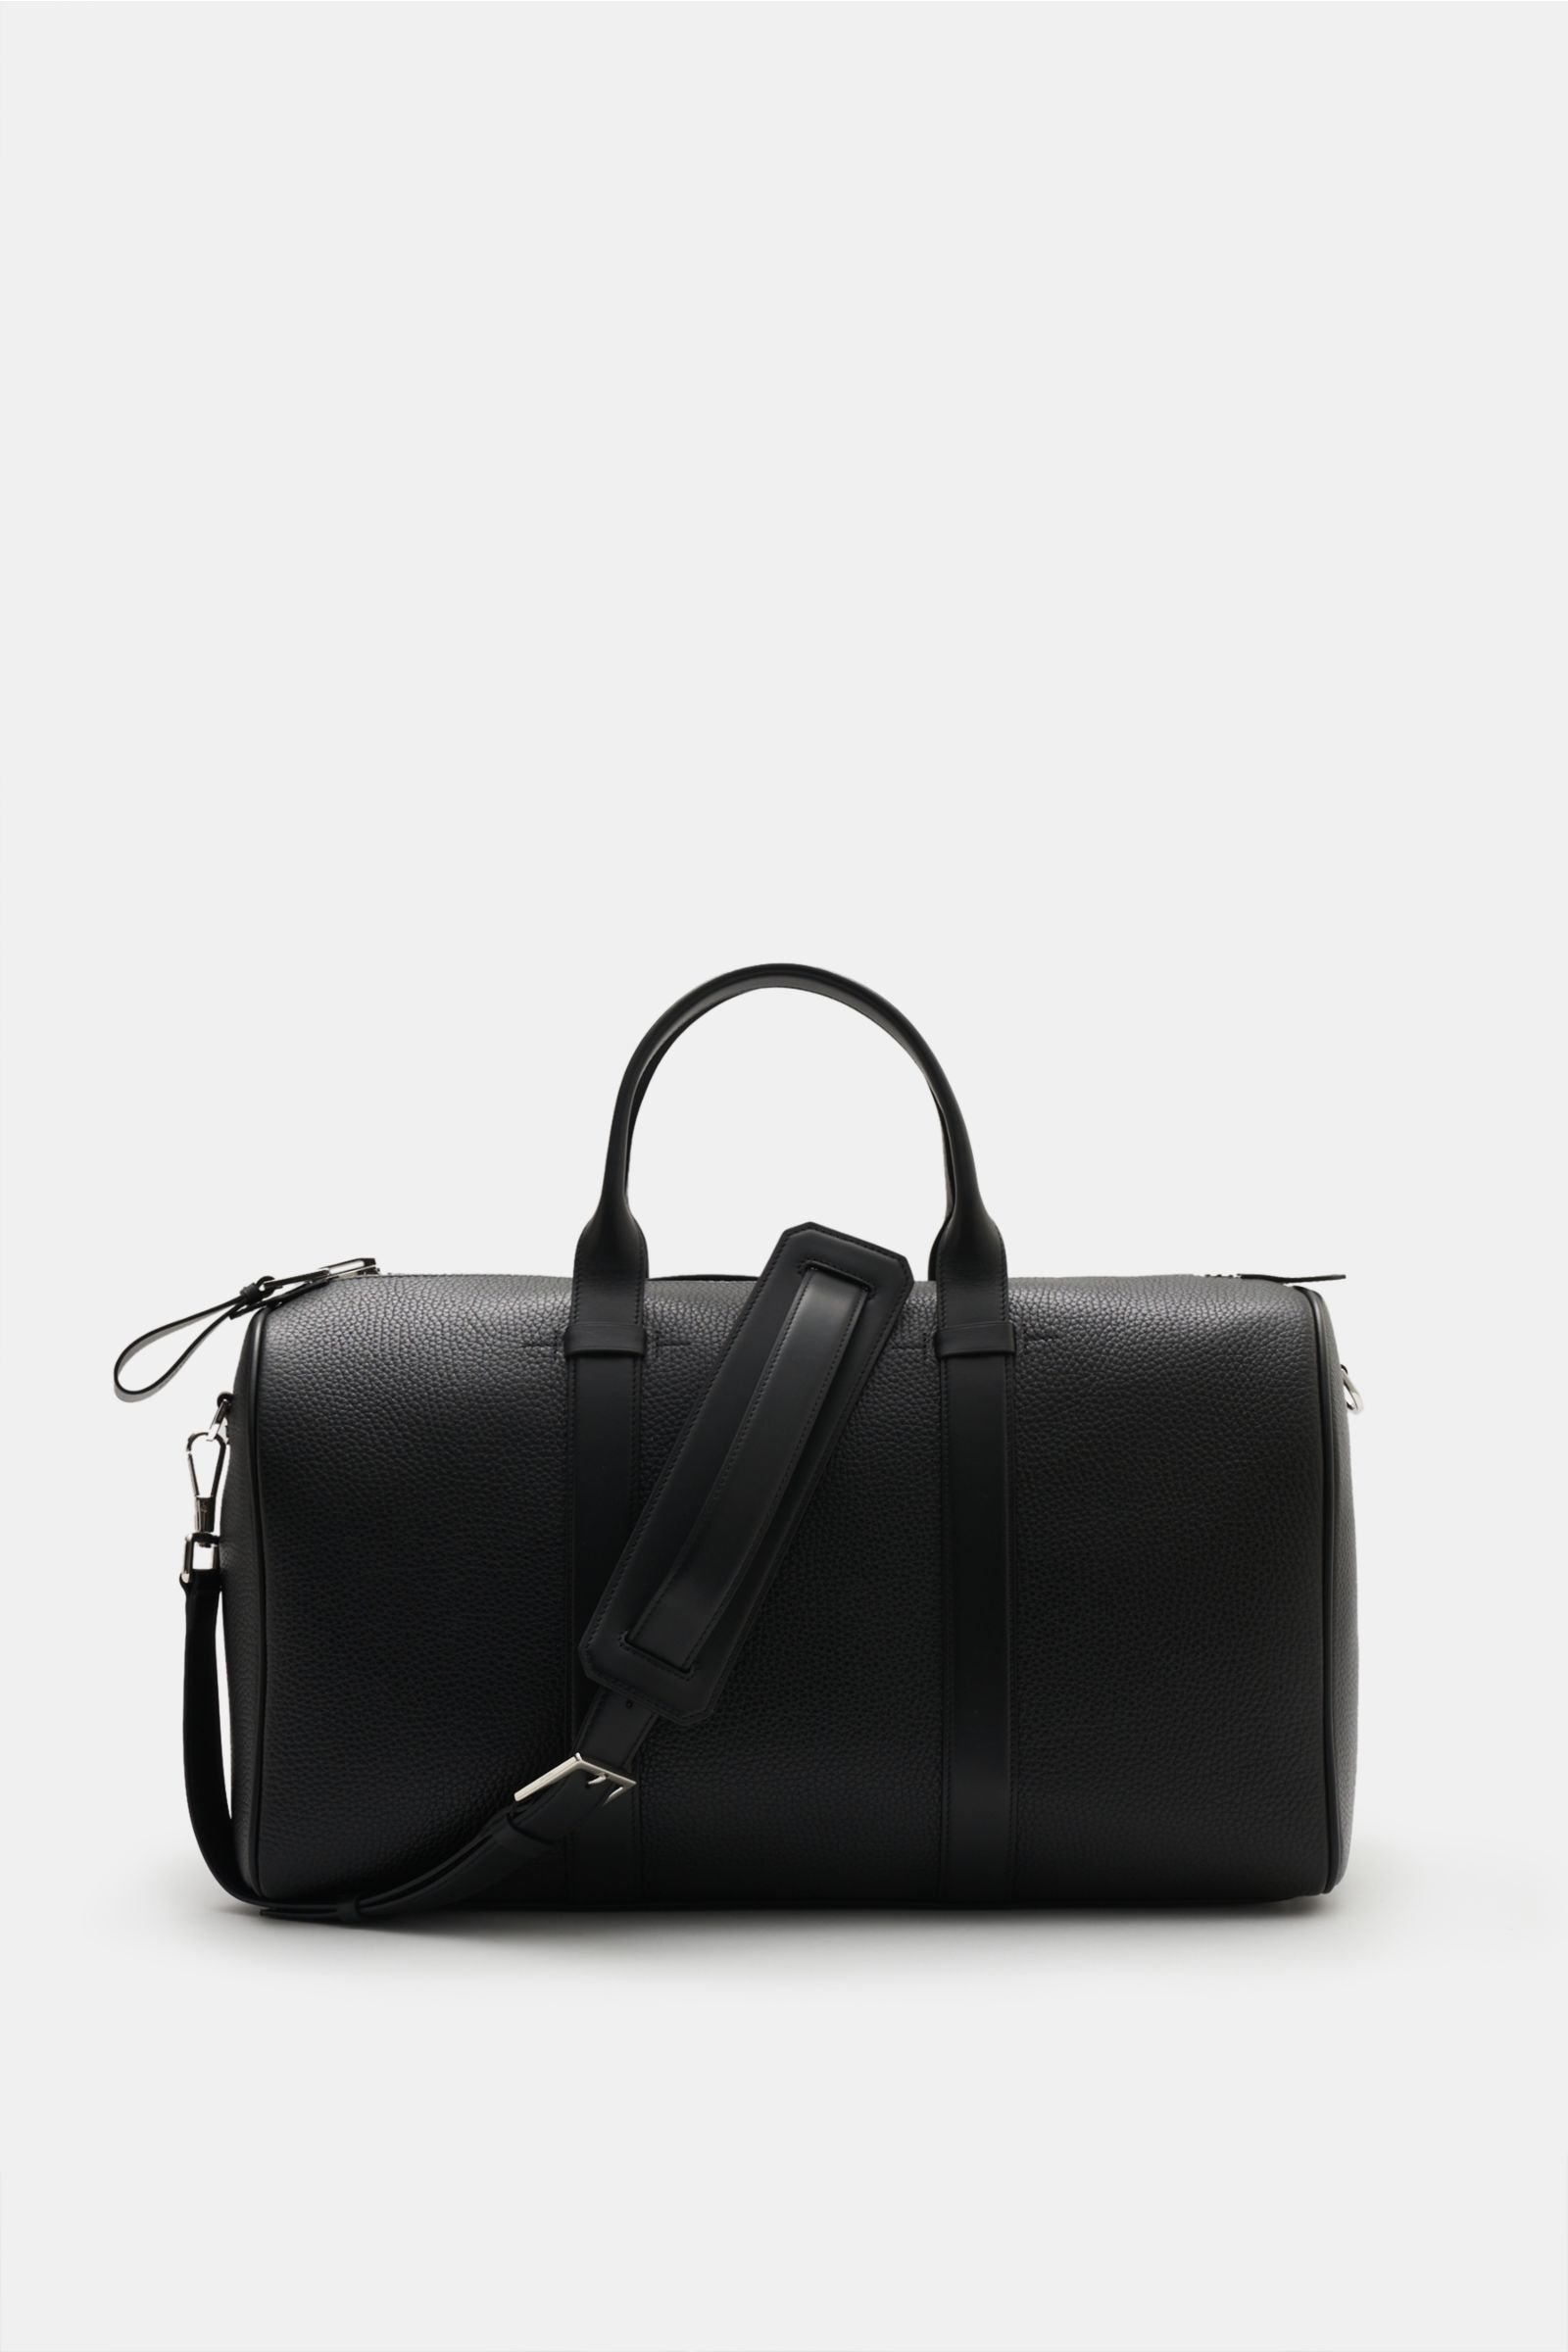 Travel bag black (size M)